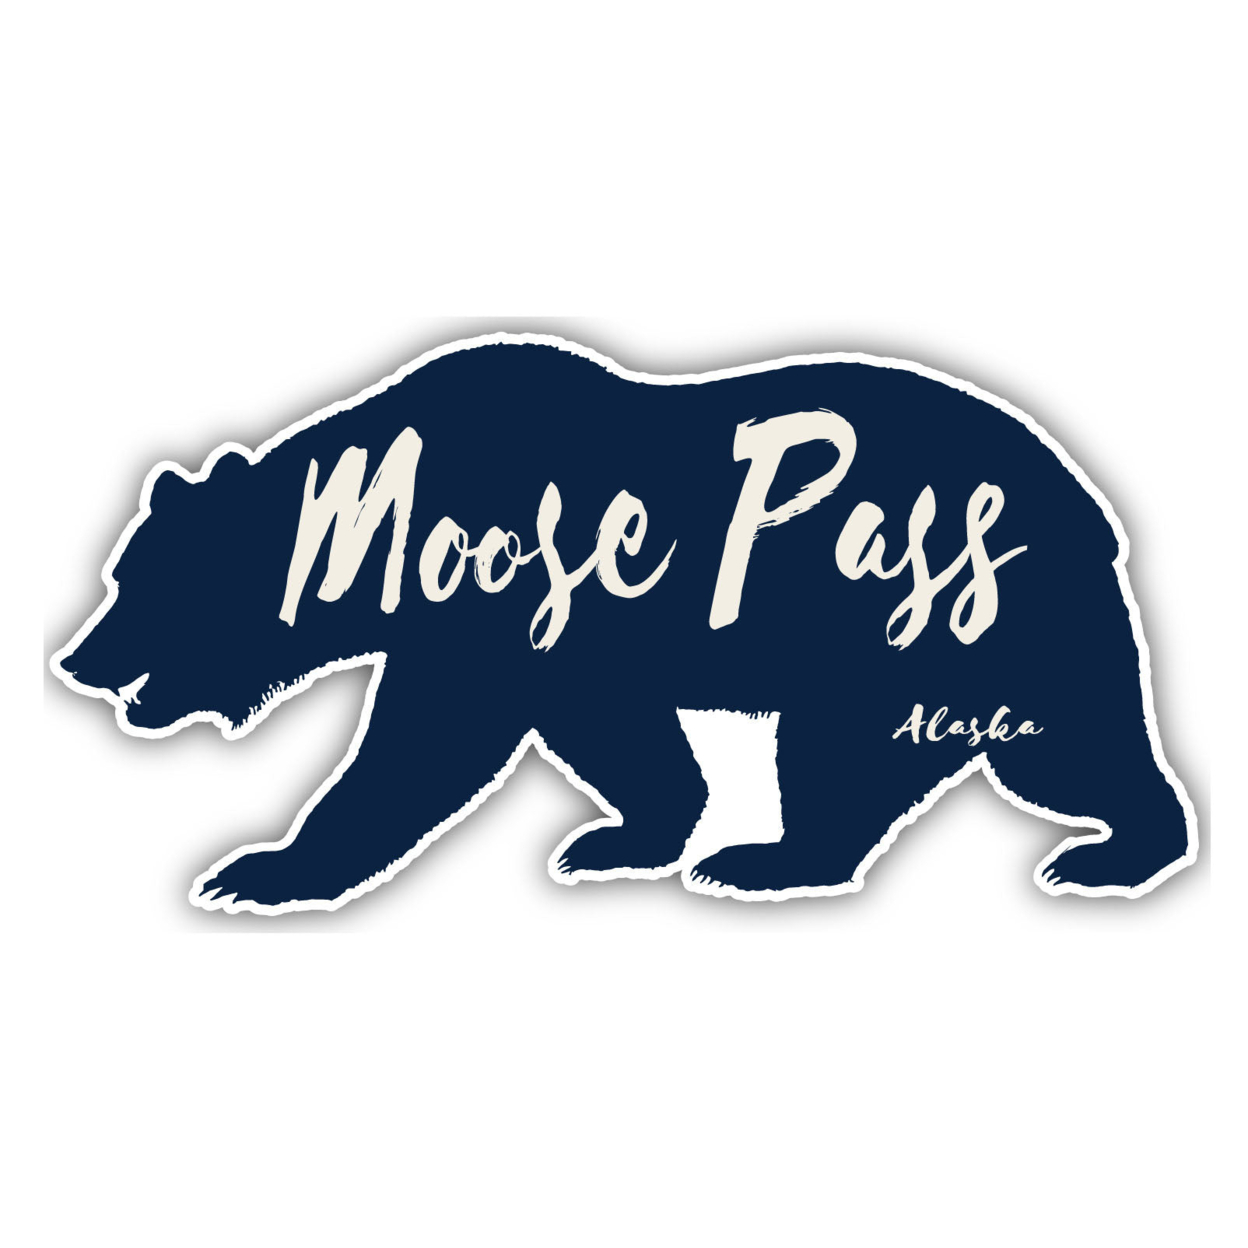 Moose Pass Alaska Souvenir Decorative Stickers (Choose Theme And Size) - Single Unit, 4-Inch, Tent